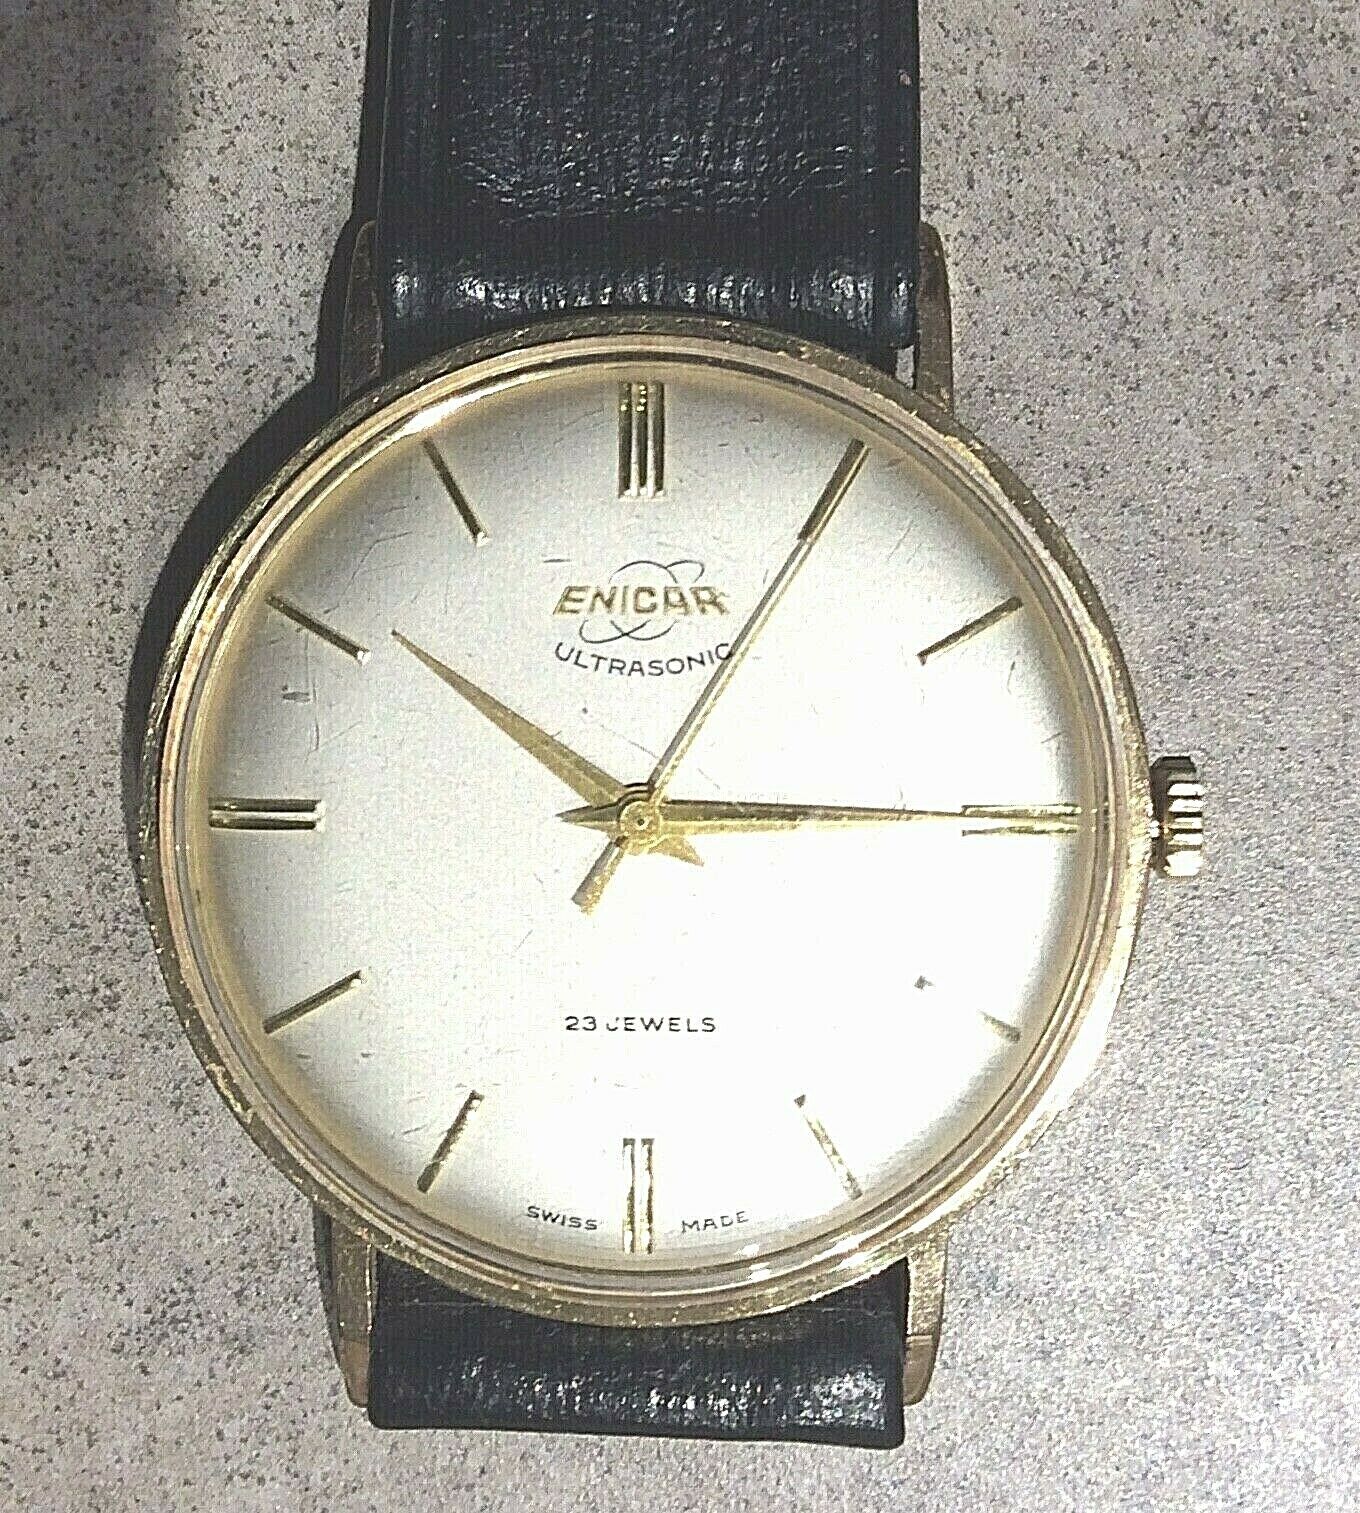 1960s ENICAR ULTRASONIC gents gold plated wrist watch - 23 jewels - Swiss Made